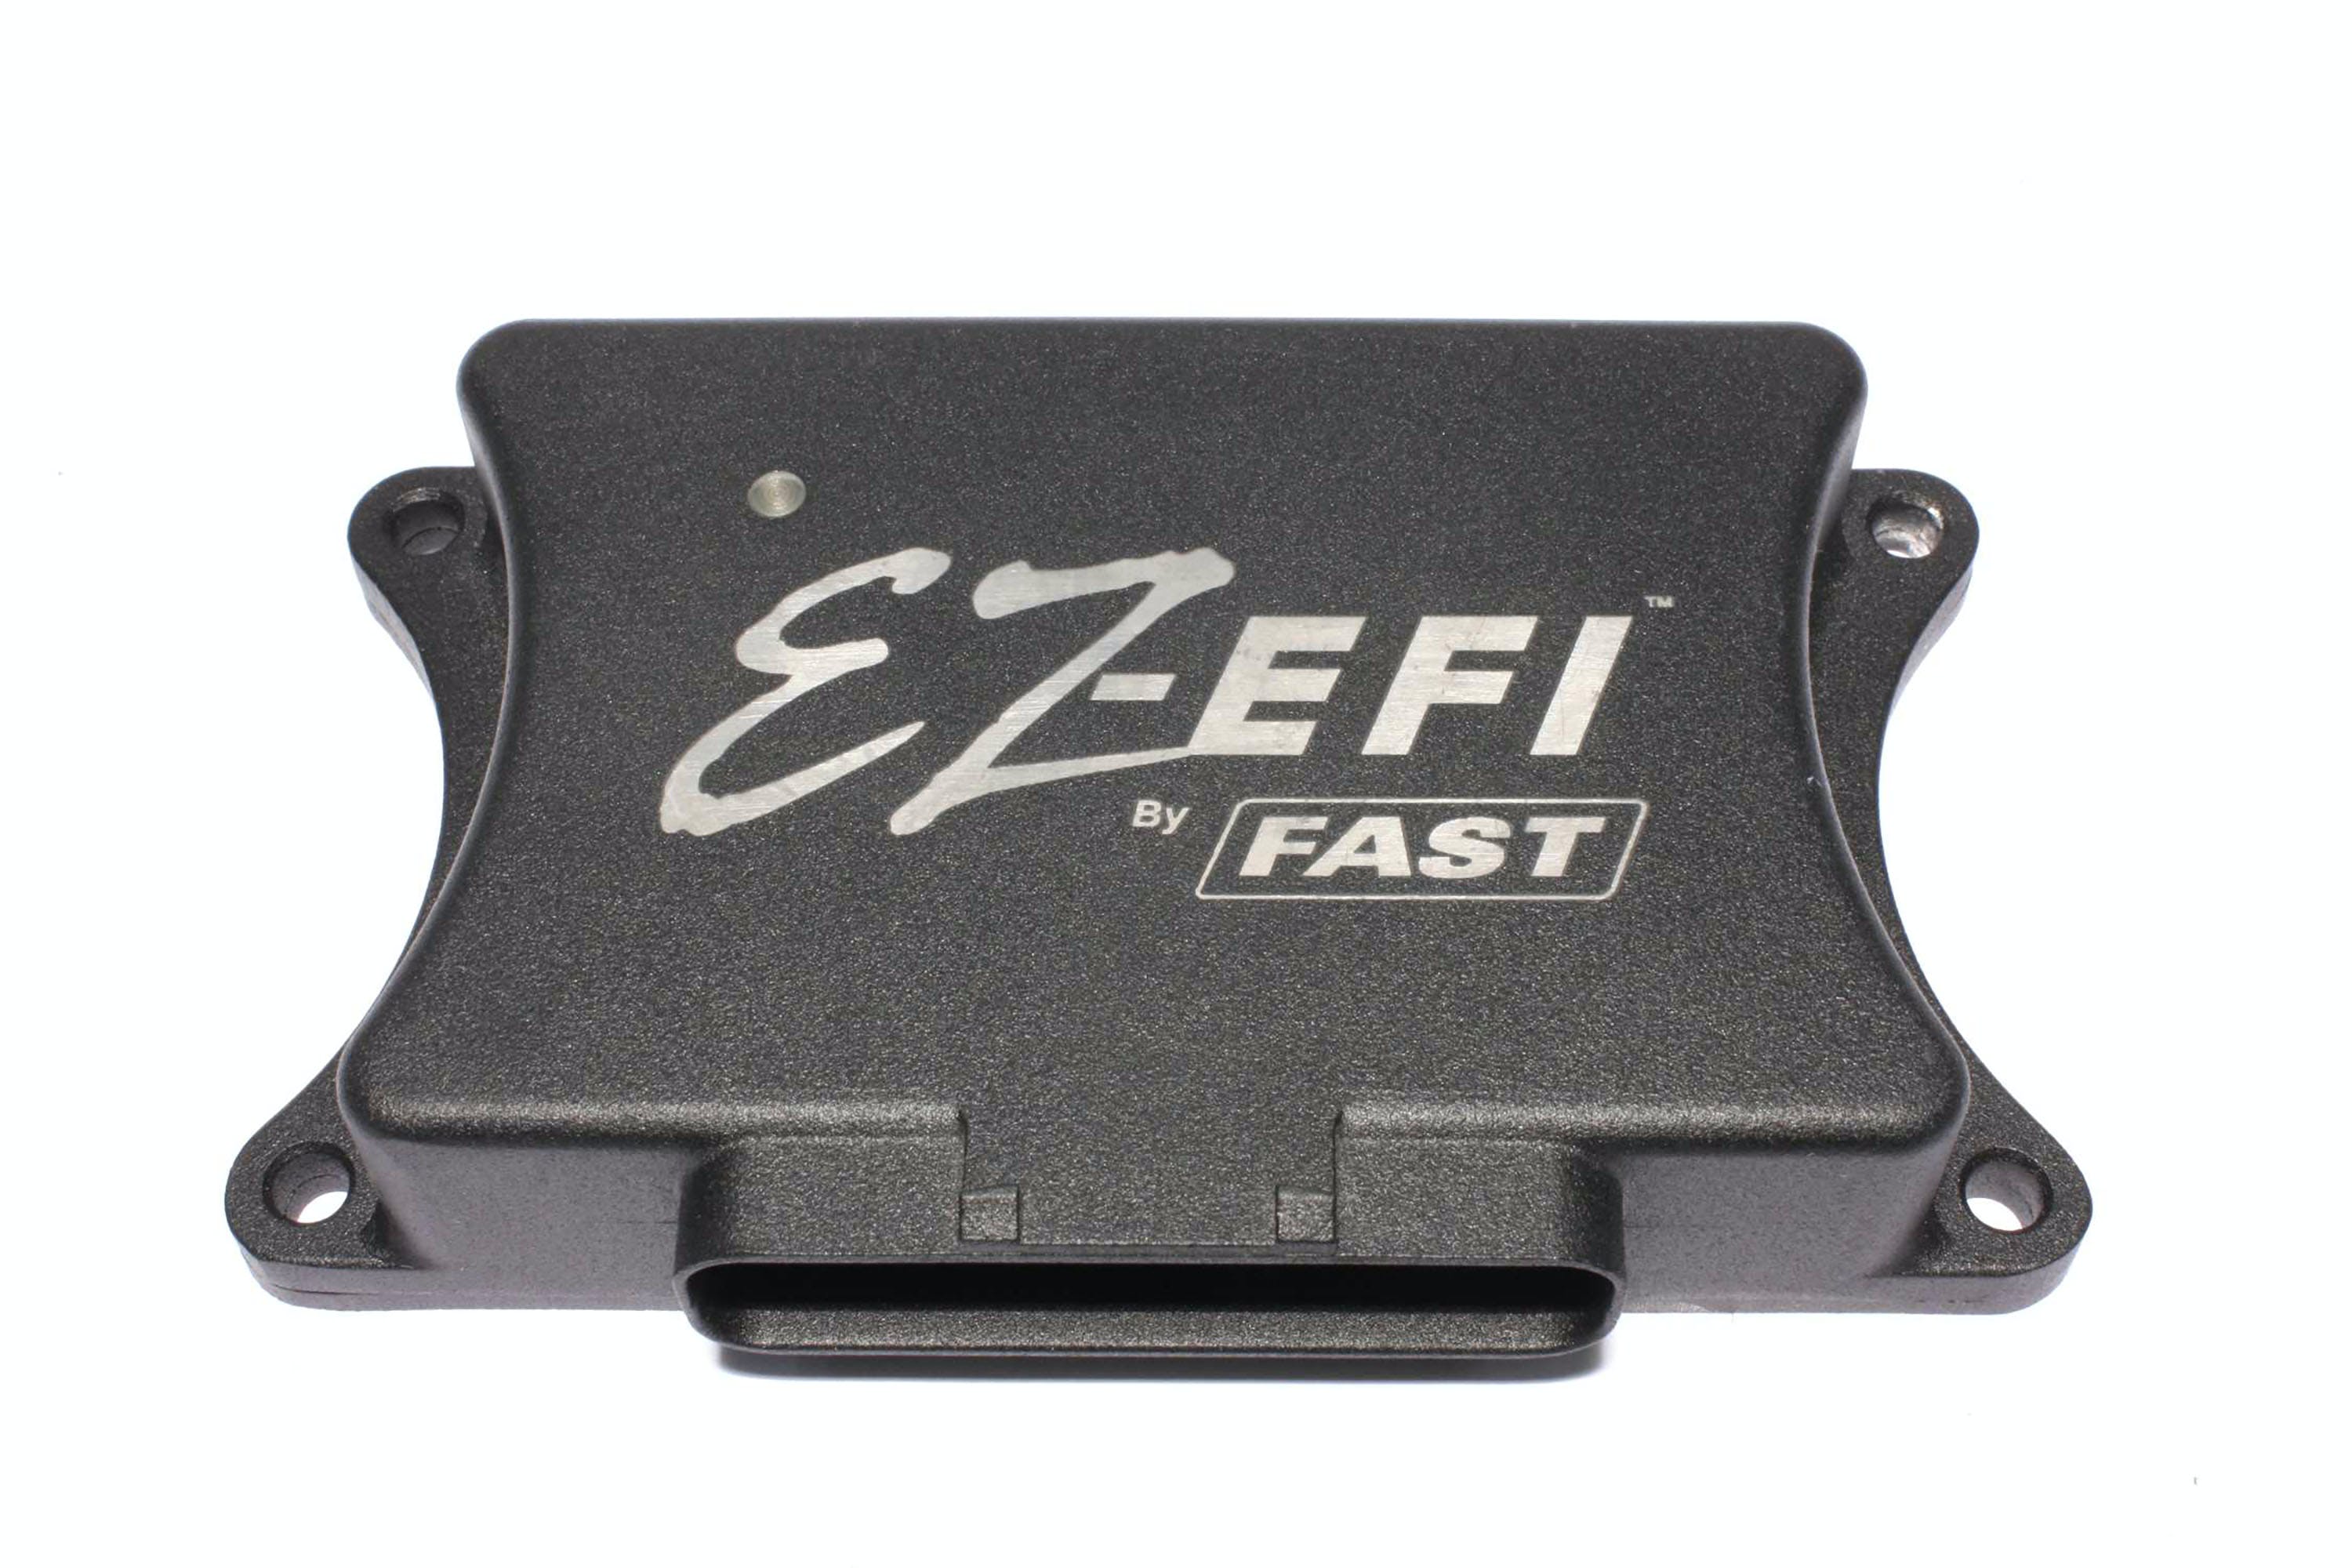 FAST - Fuel Air Spark Technology 30226 EZ EFI 1.0 Computer